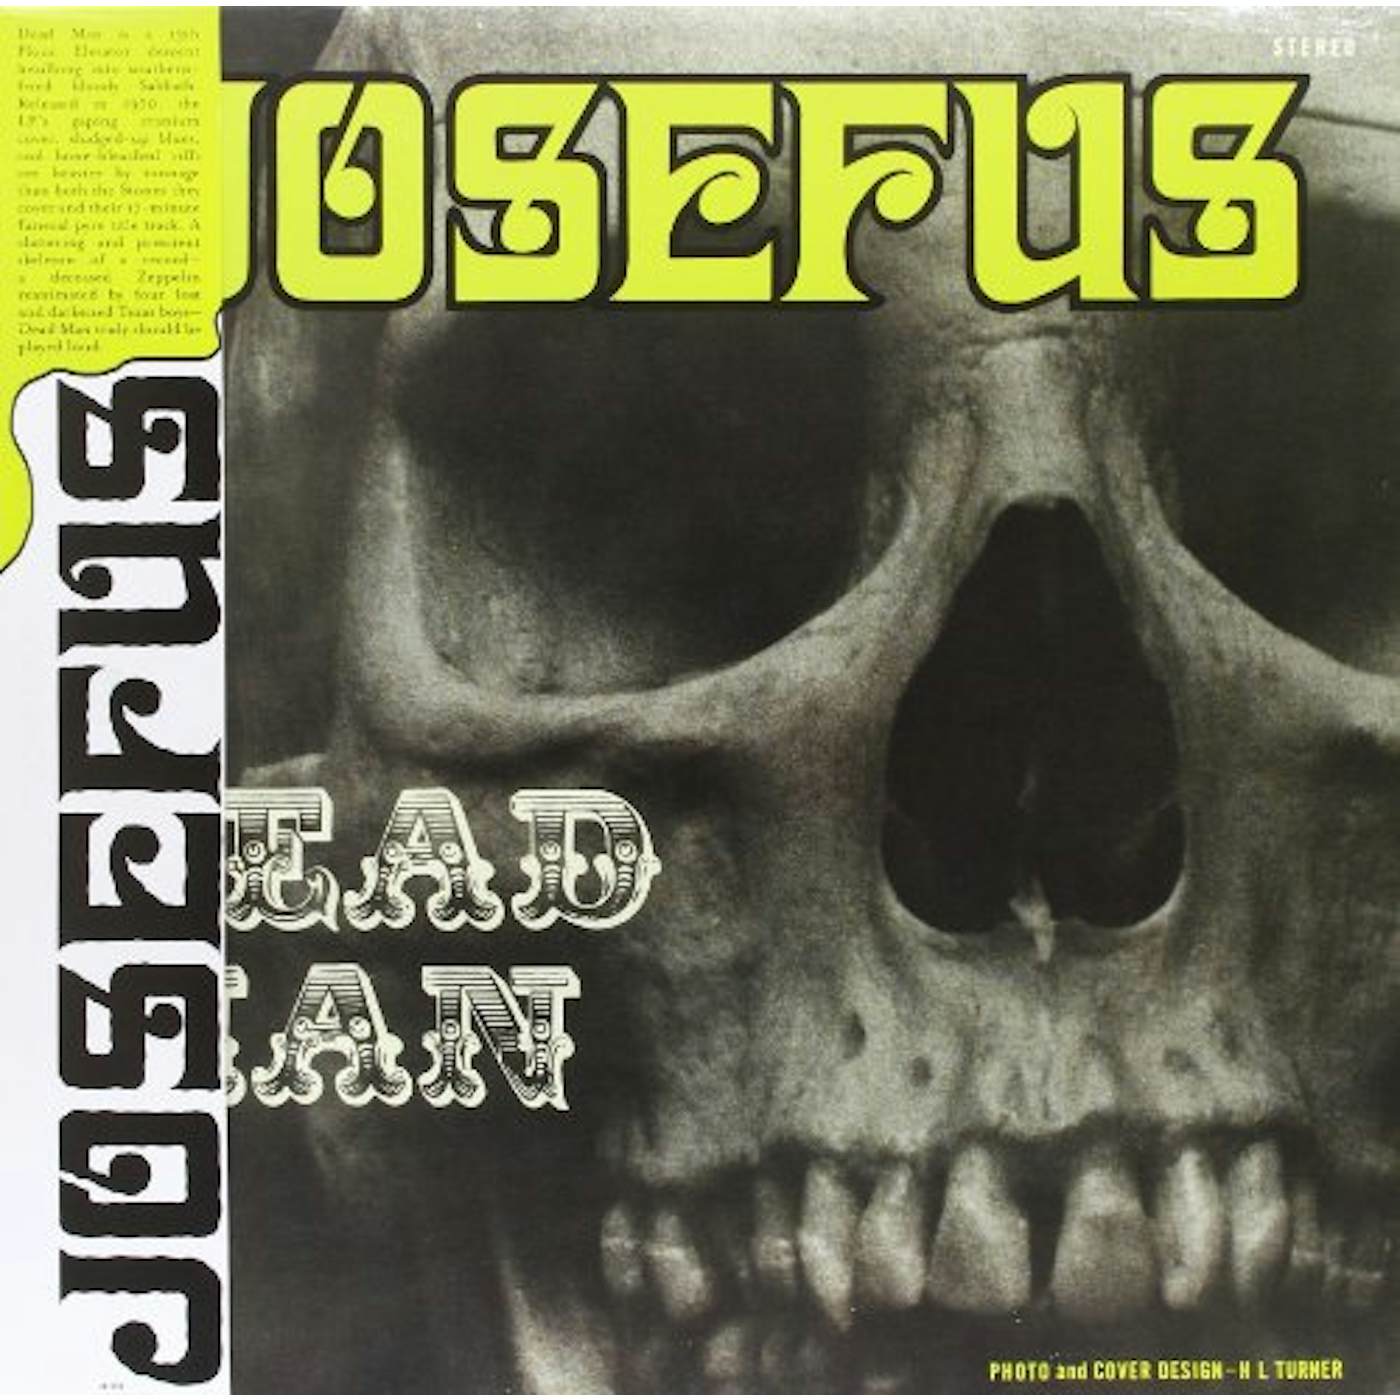 Josefus Dead Man Vinyl Record